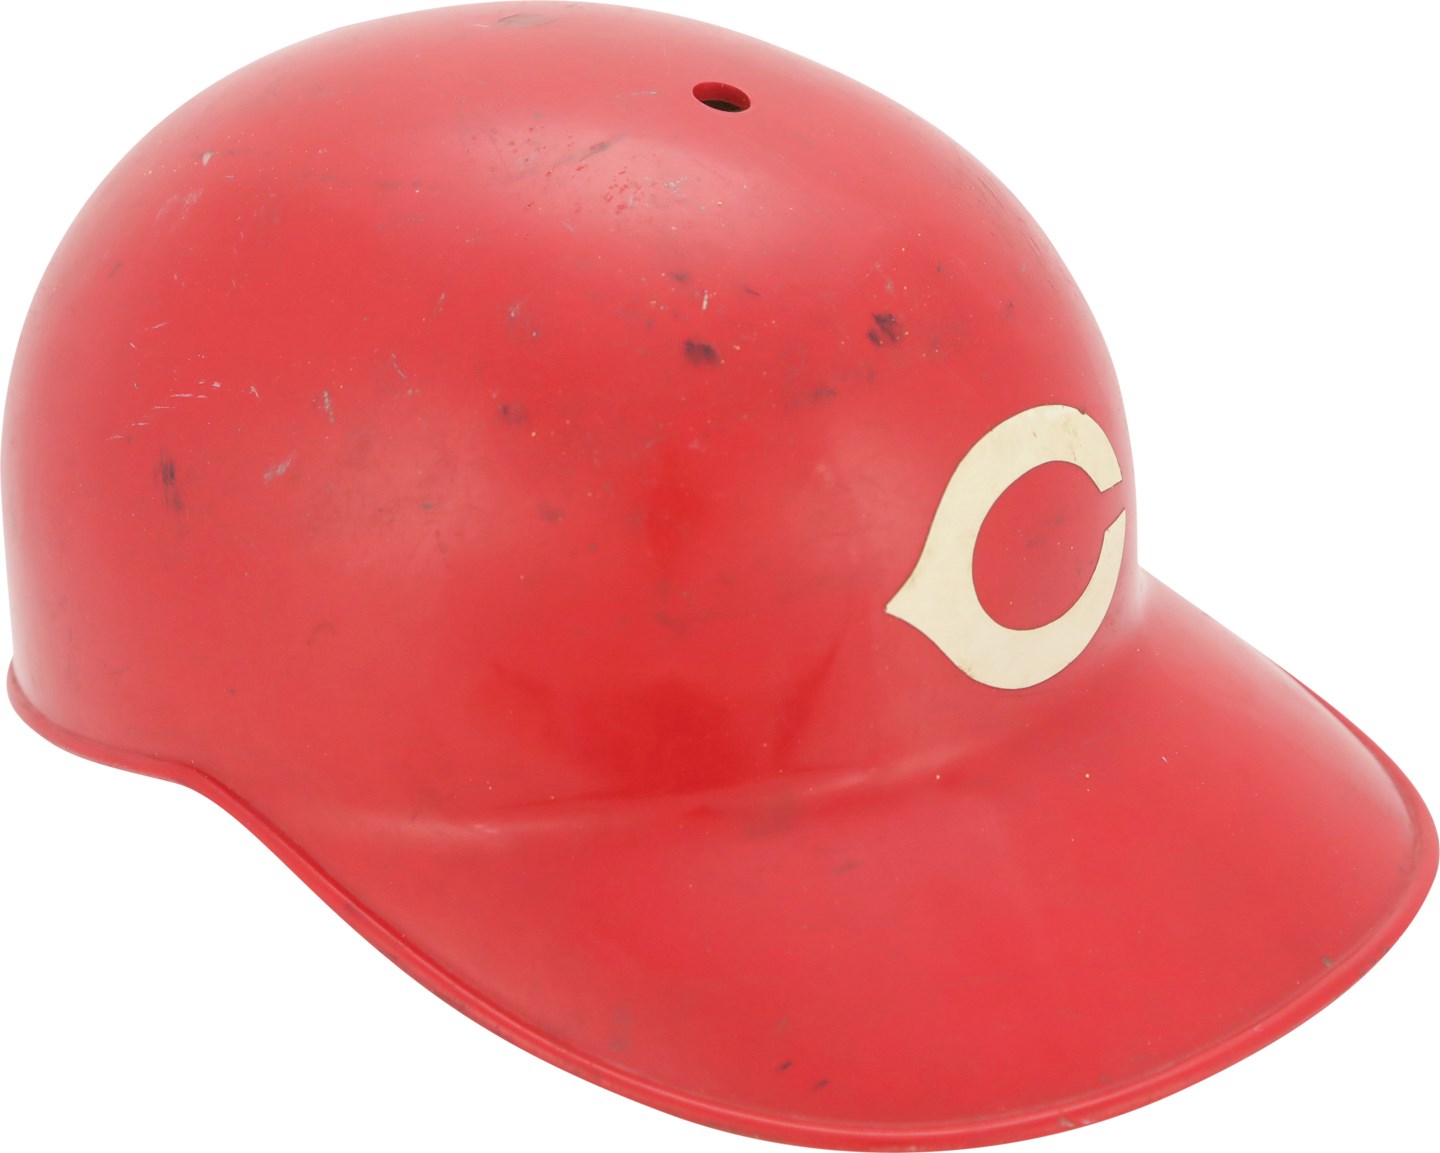 Pete Rose & Cincinnati Reds - 1970s Pedro Borbon Cincinnati Reds Game Used Helmet (Displayed in Reds Museum)